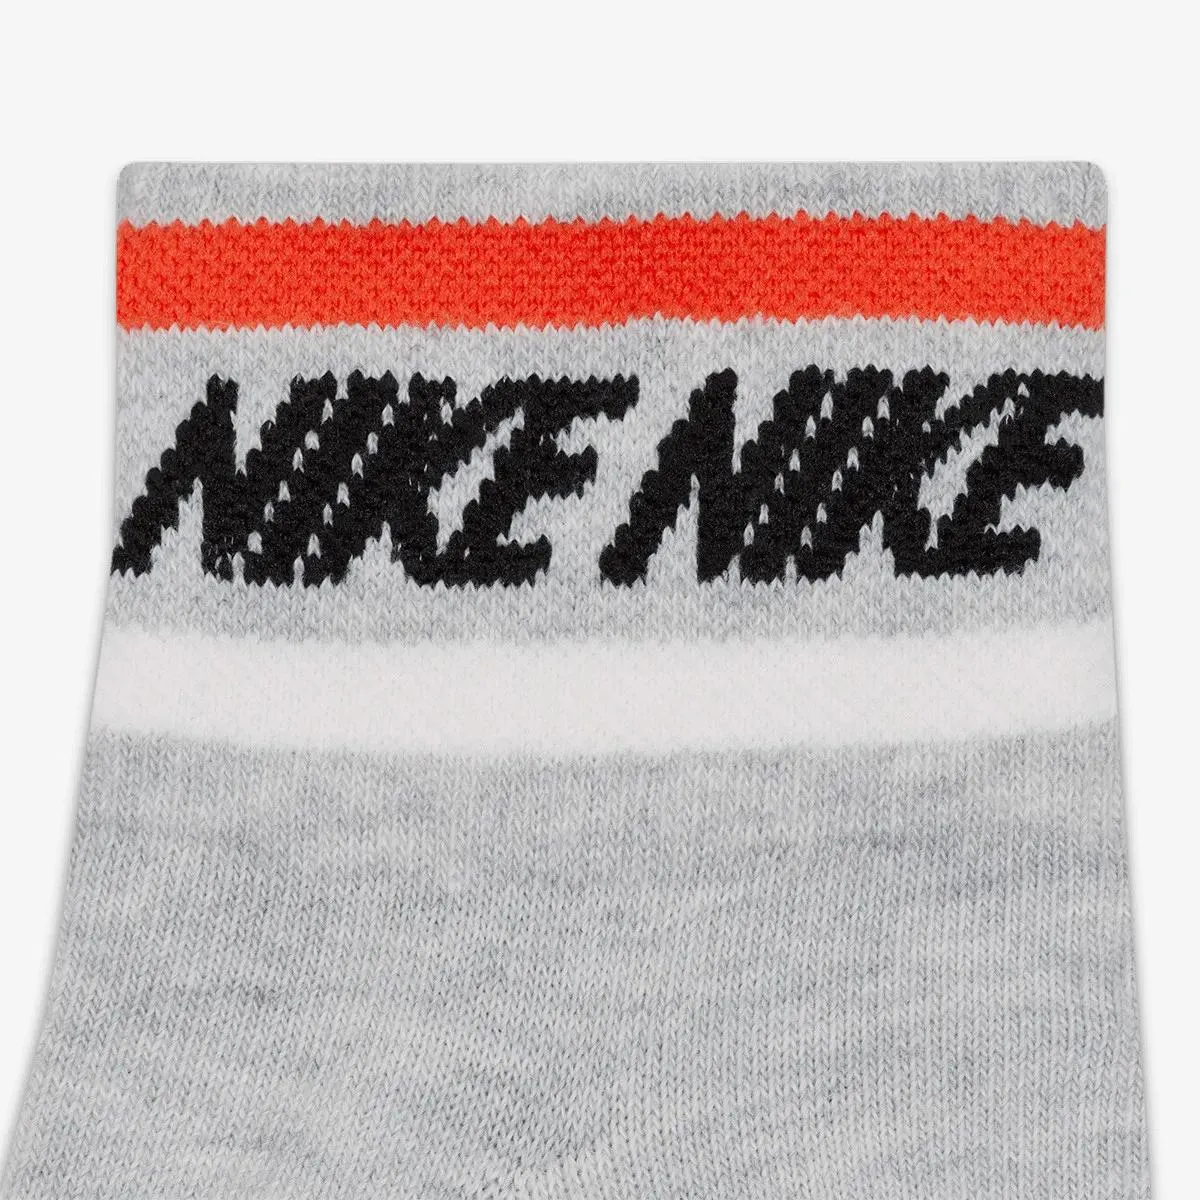 Nike Čarape Everyday Essential 